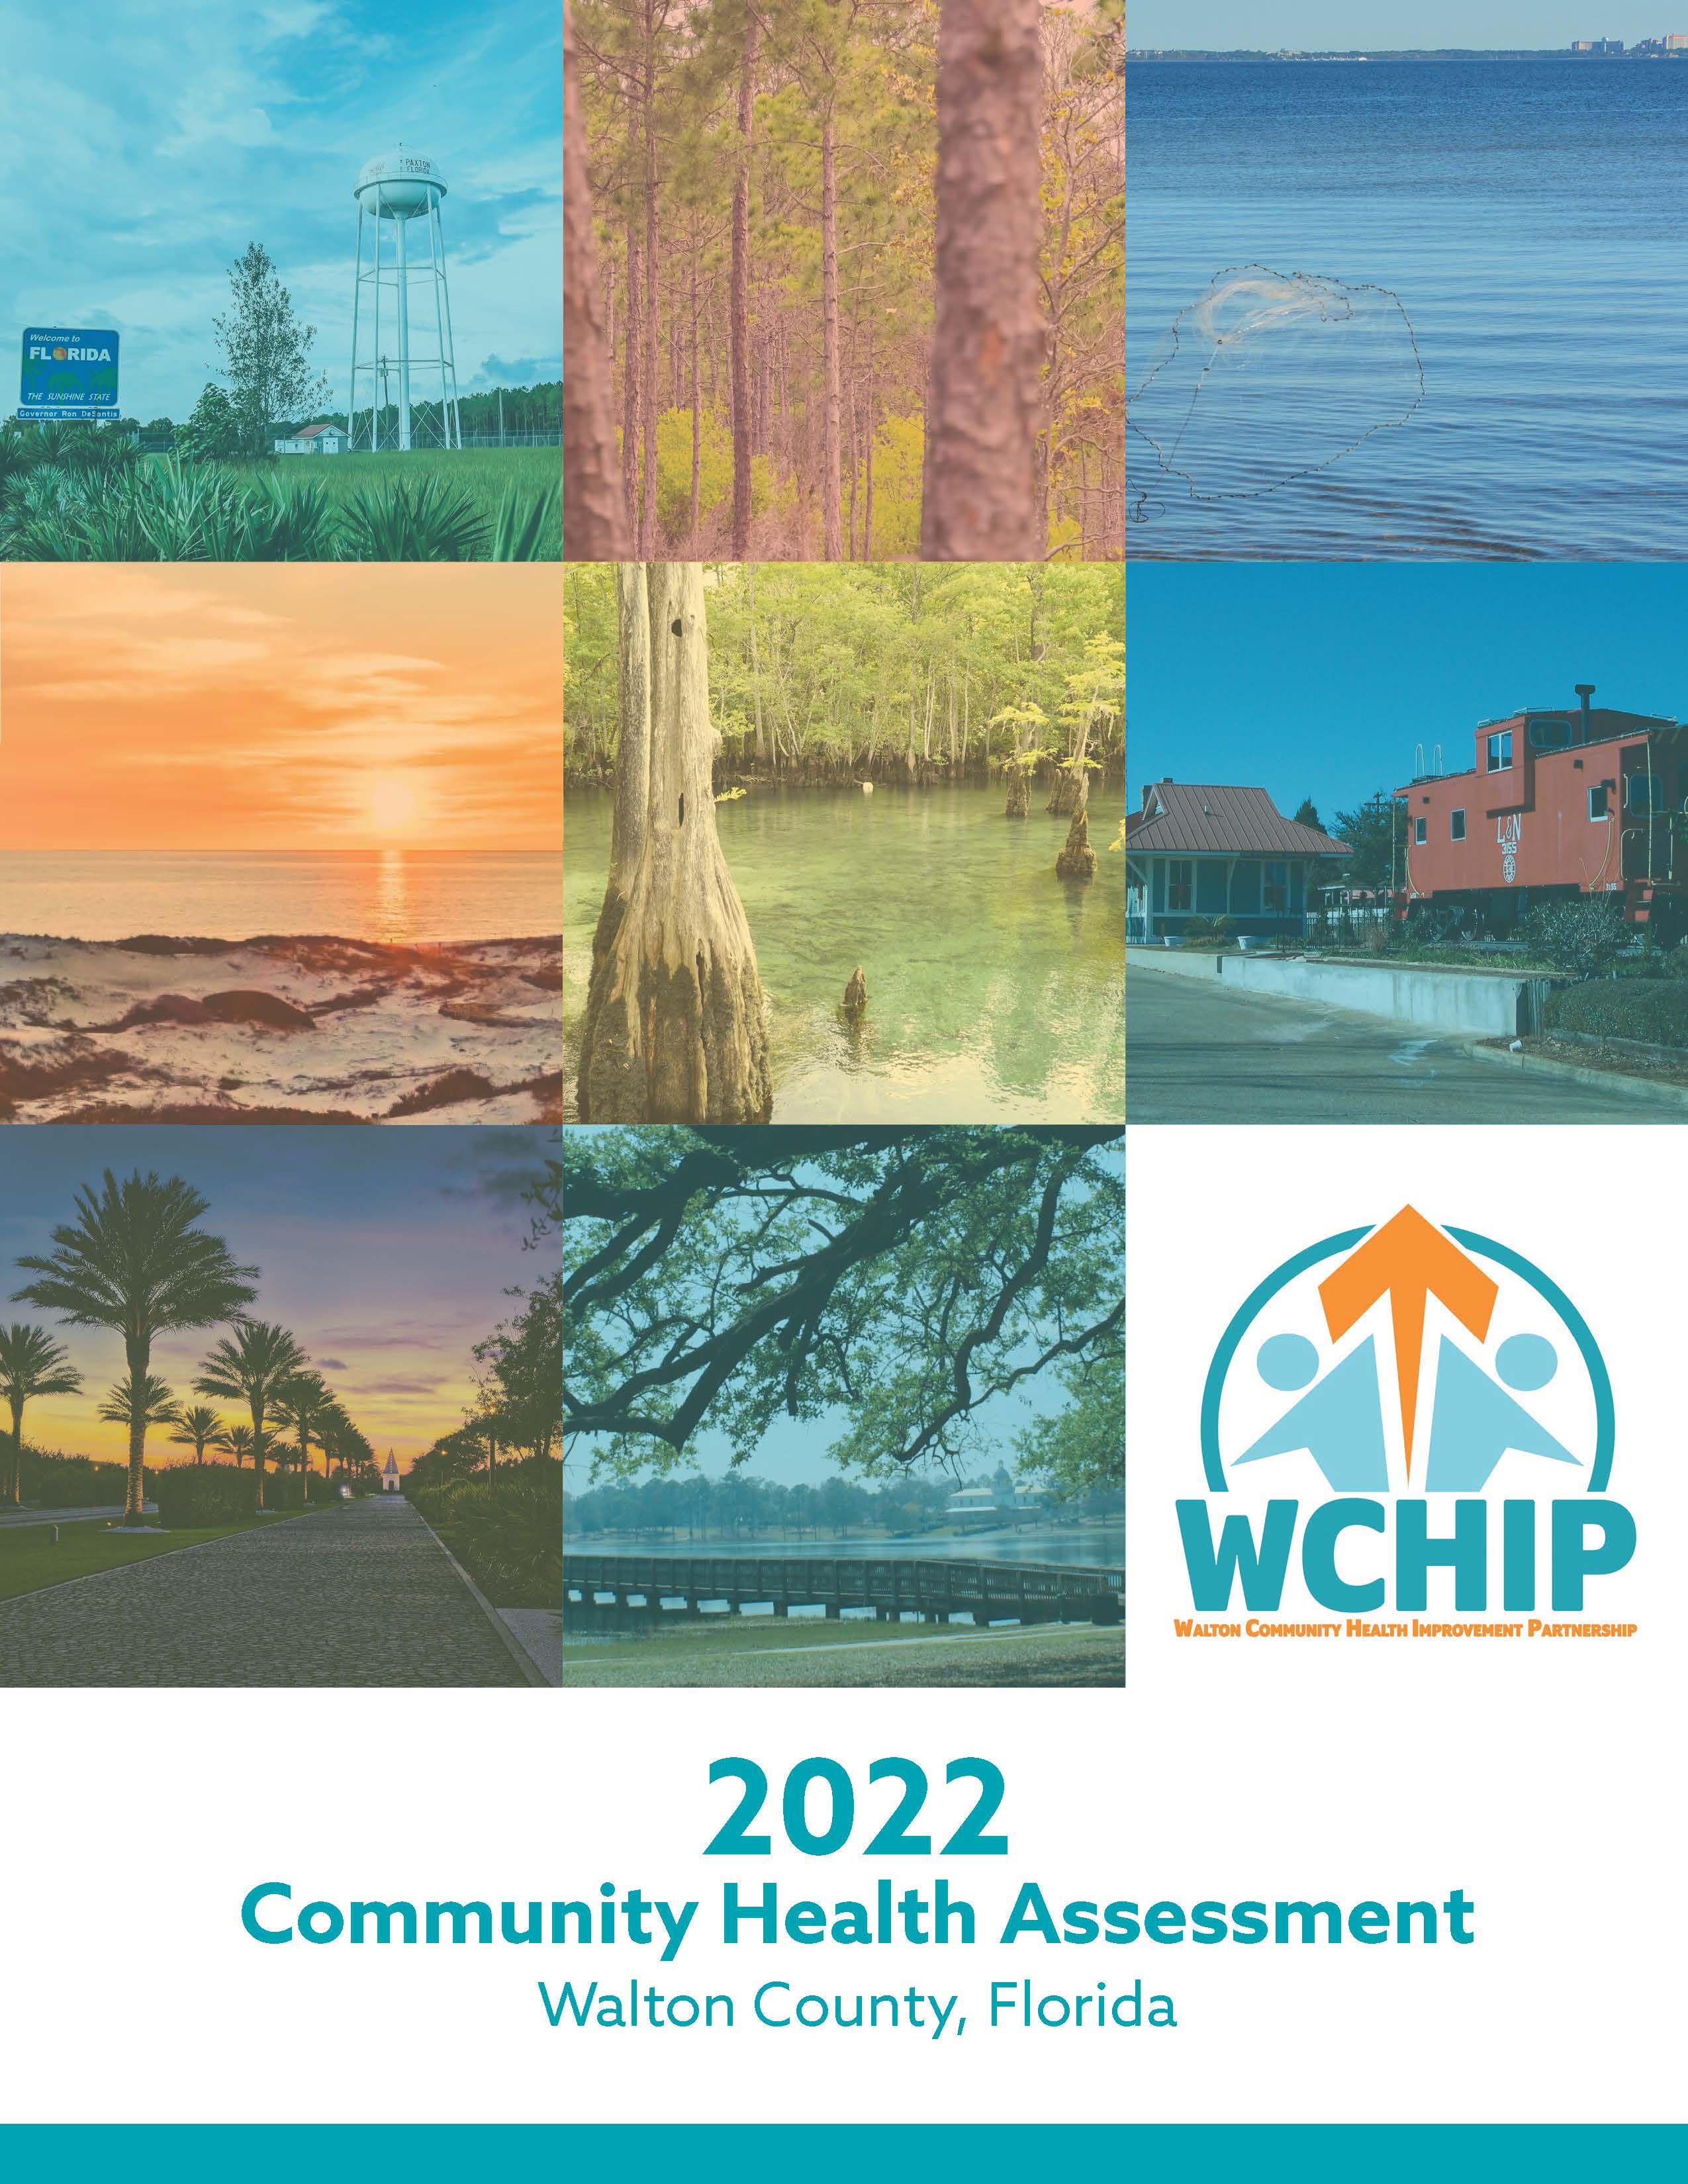 Community Health Assessment and Community Health Improvement Plan 